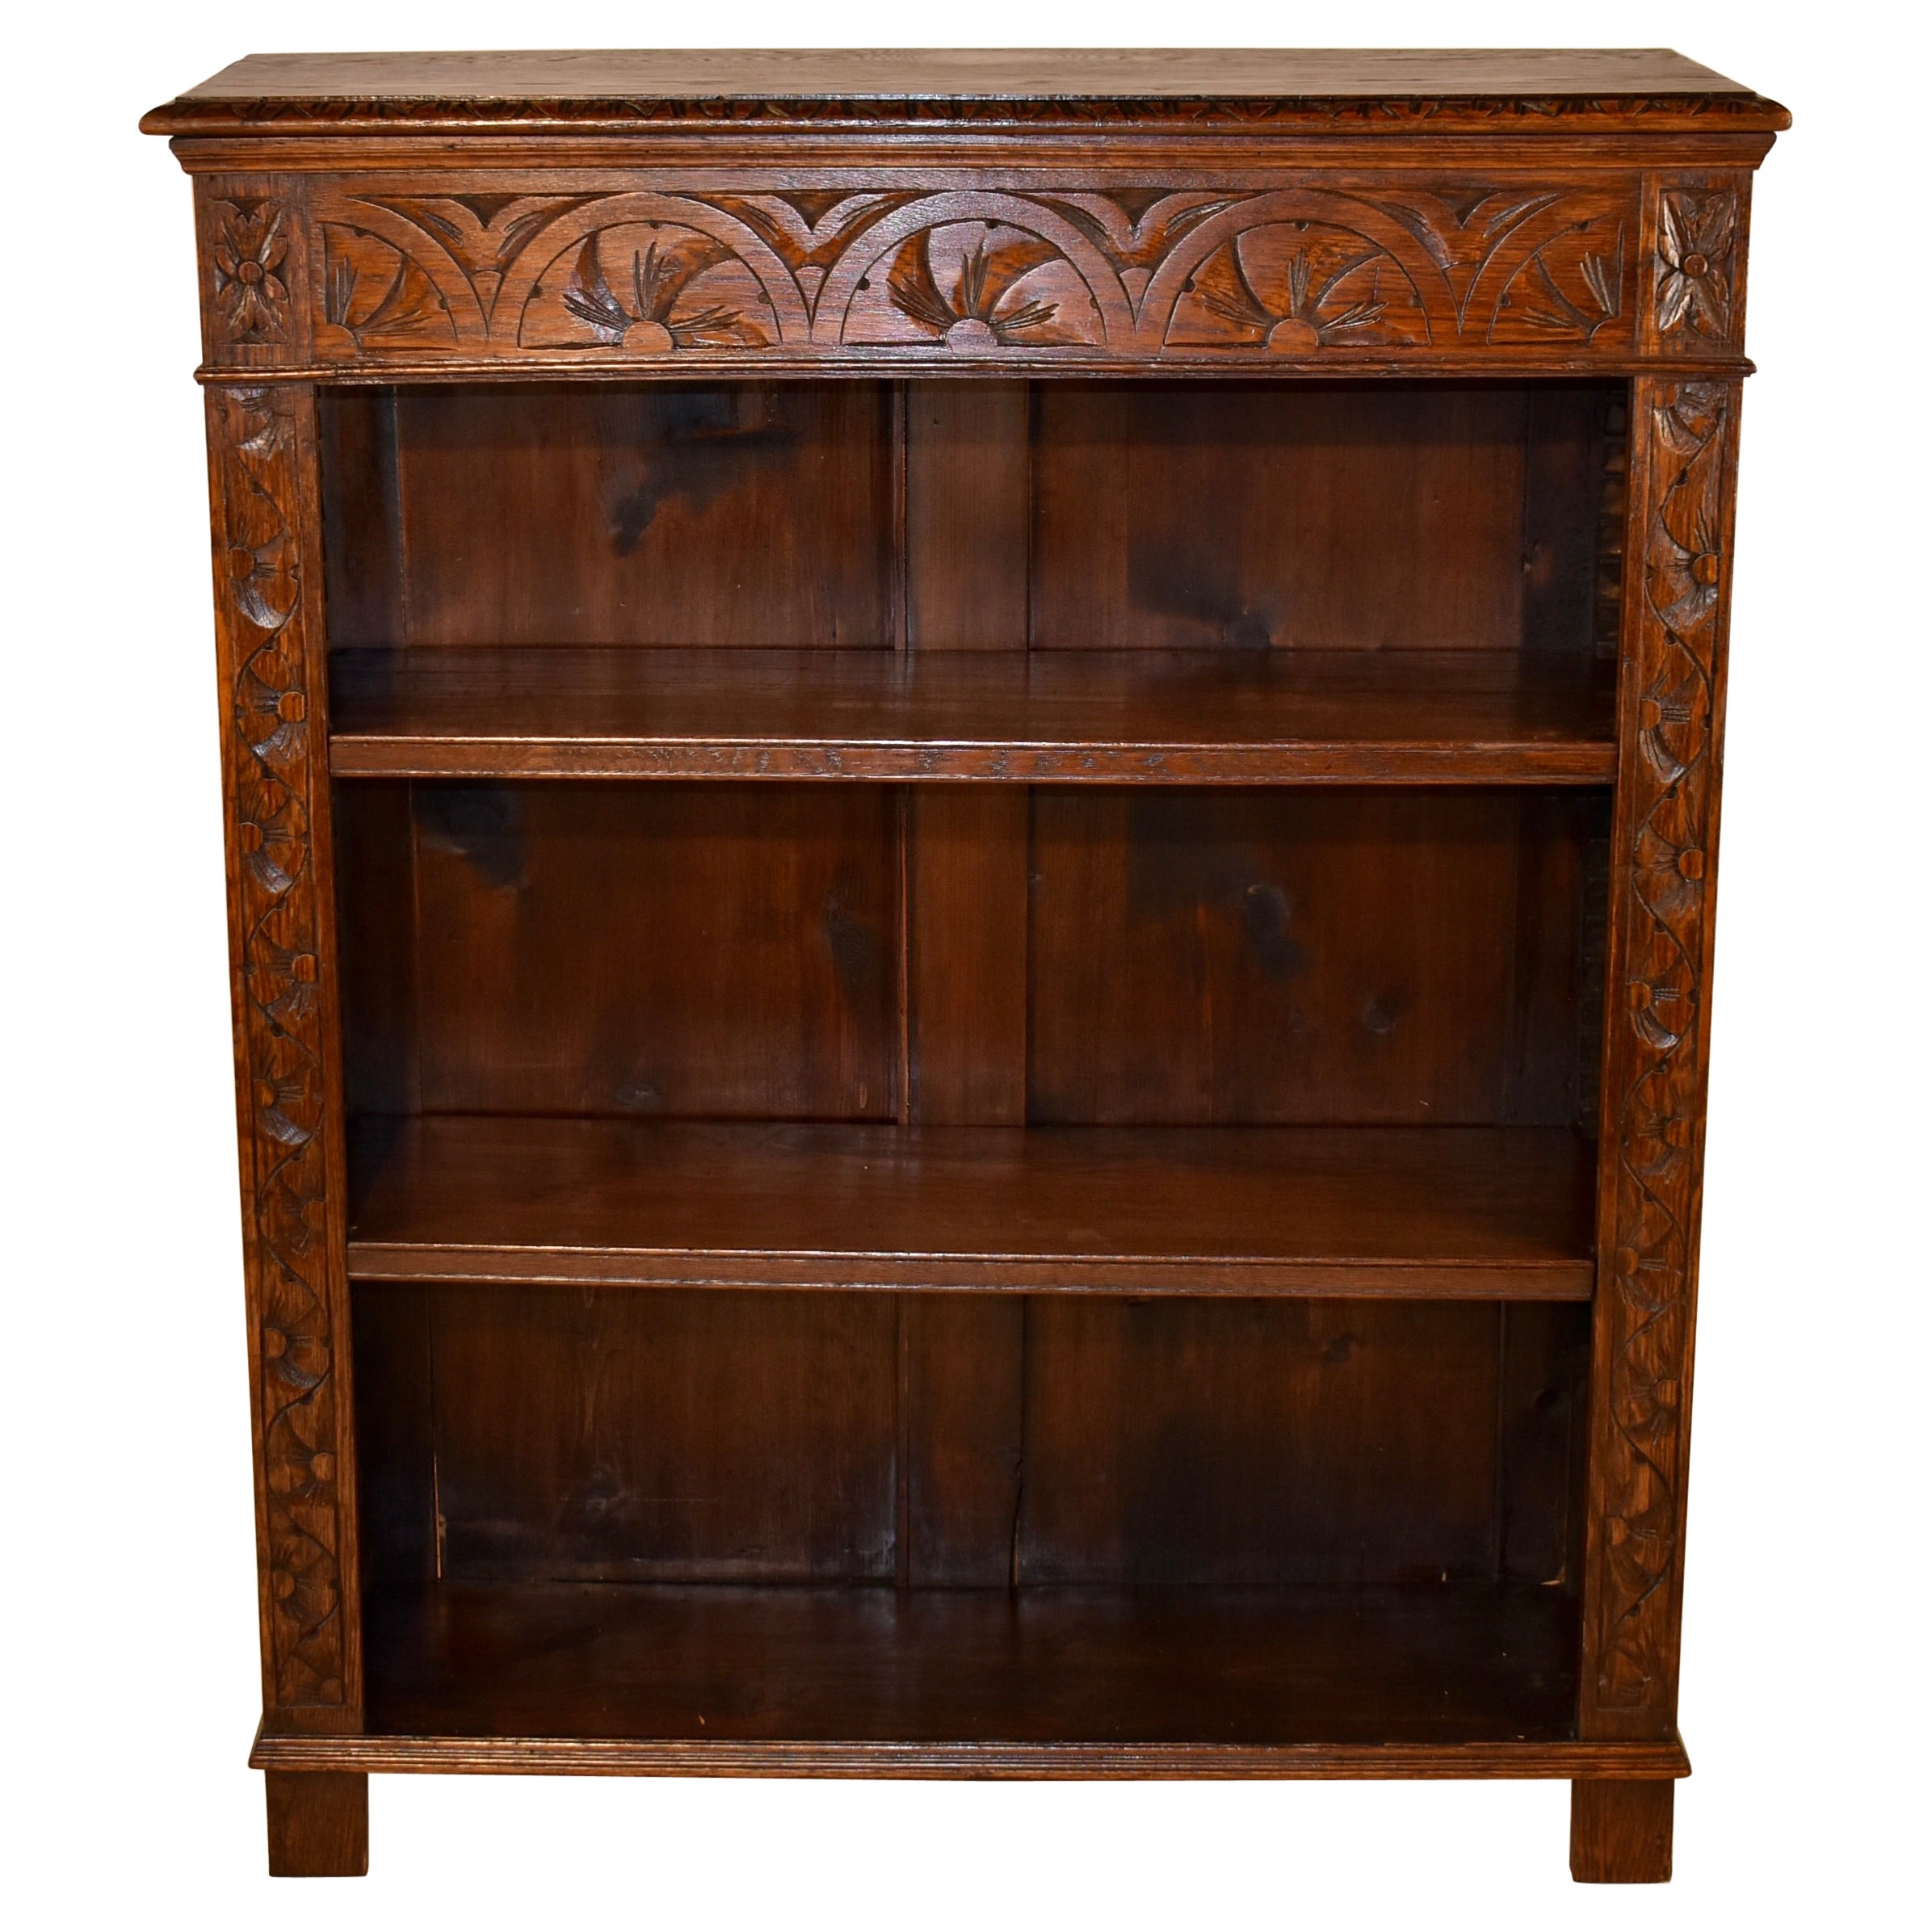 Late 19th Century English Oak Bookcase